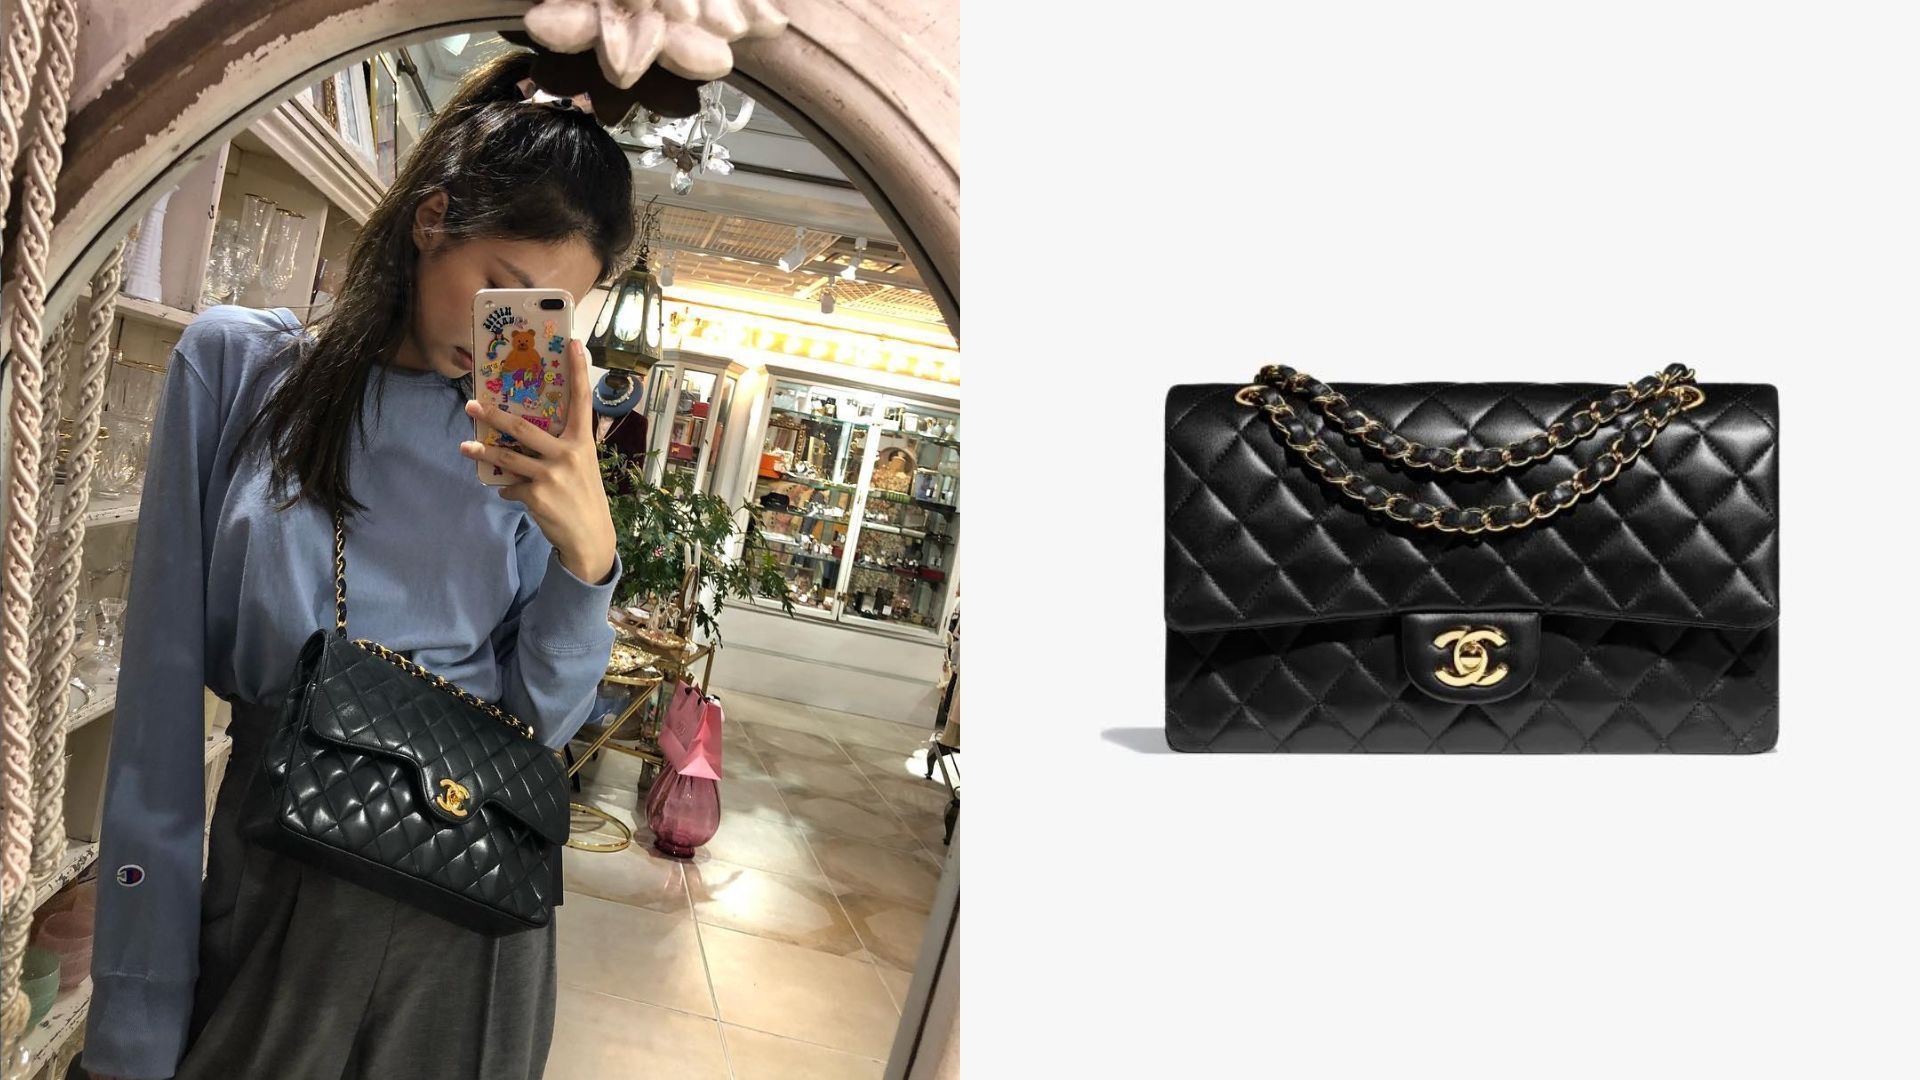 BLACKPINK Jennie Fronts Campaign for Chanel 22 Bag